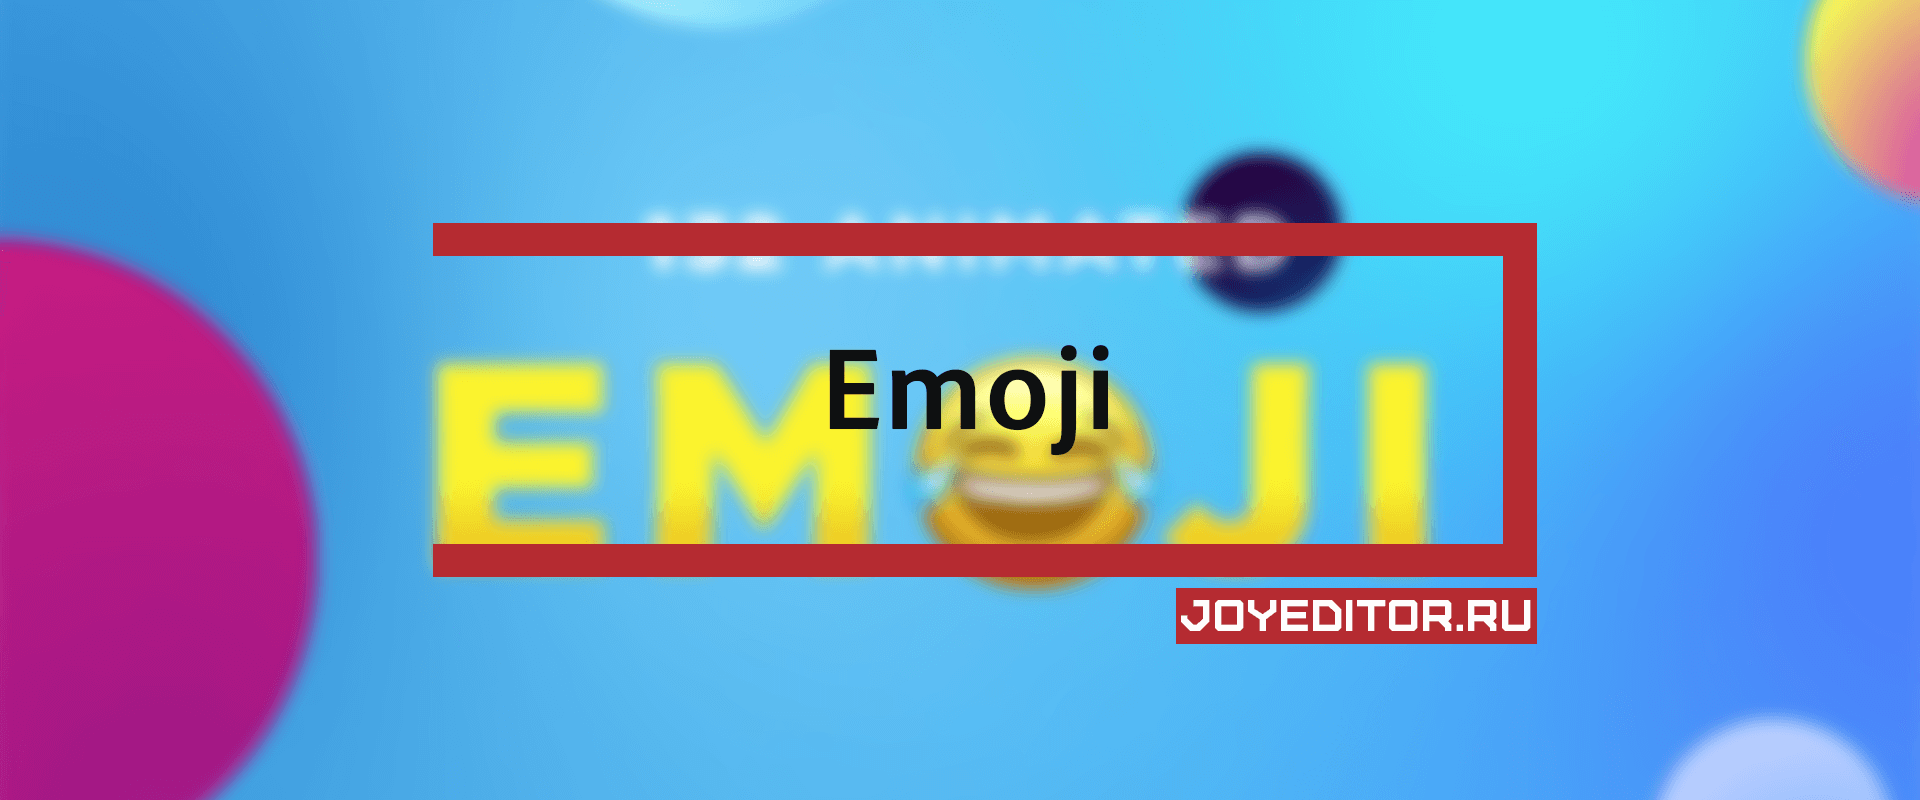 VideoHive - Emoji